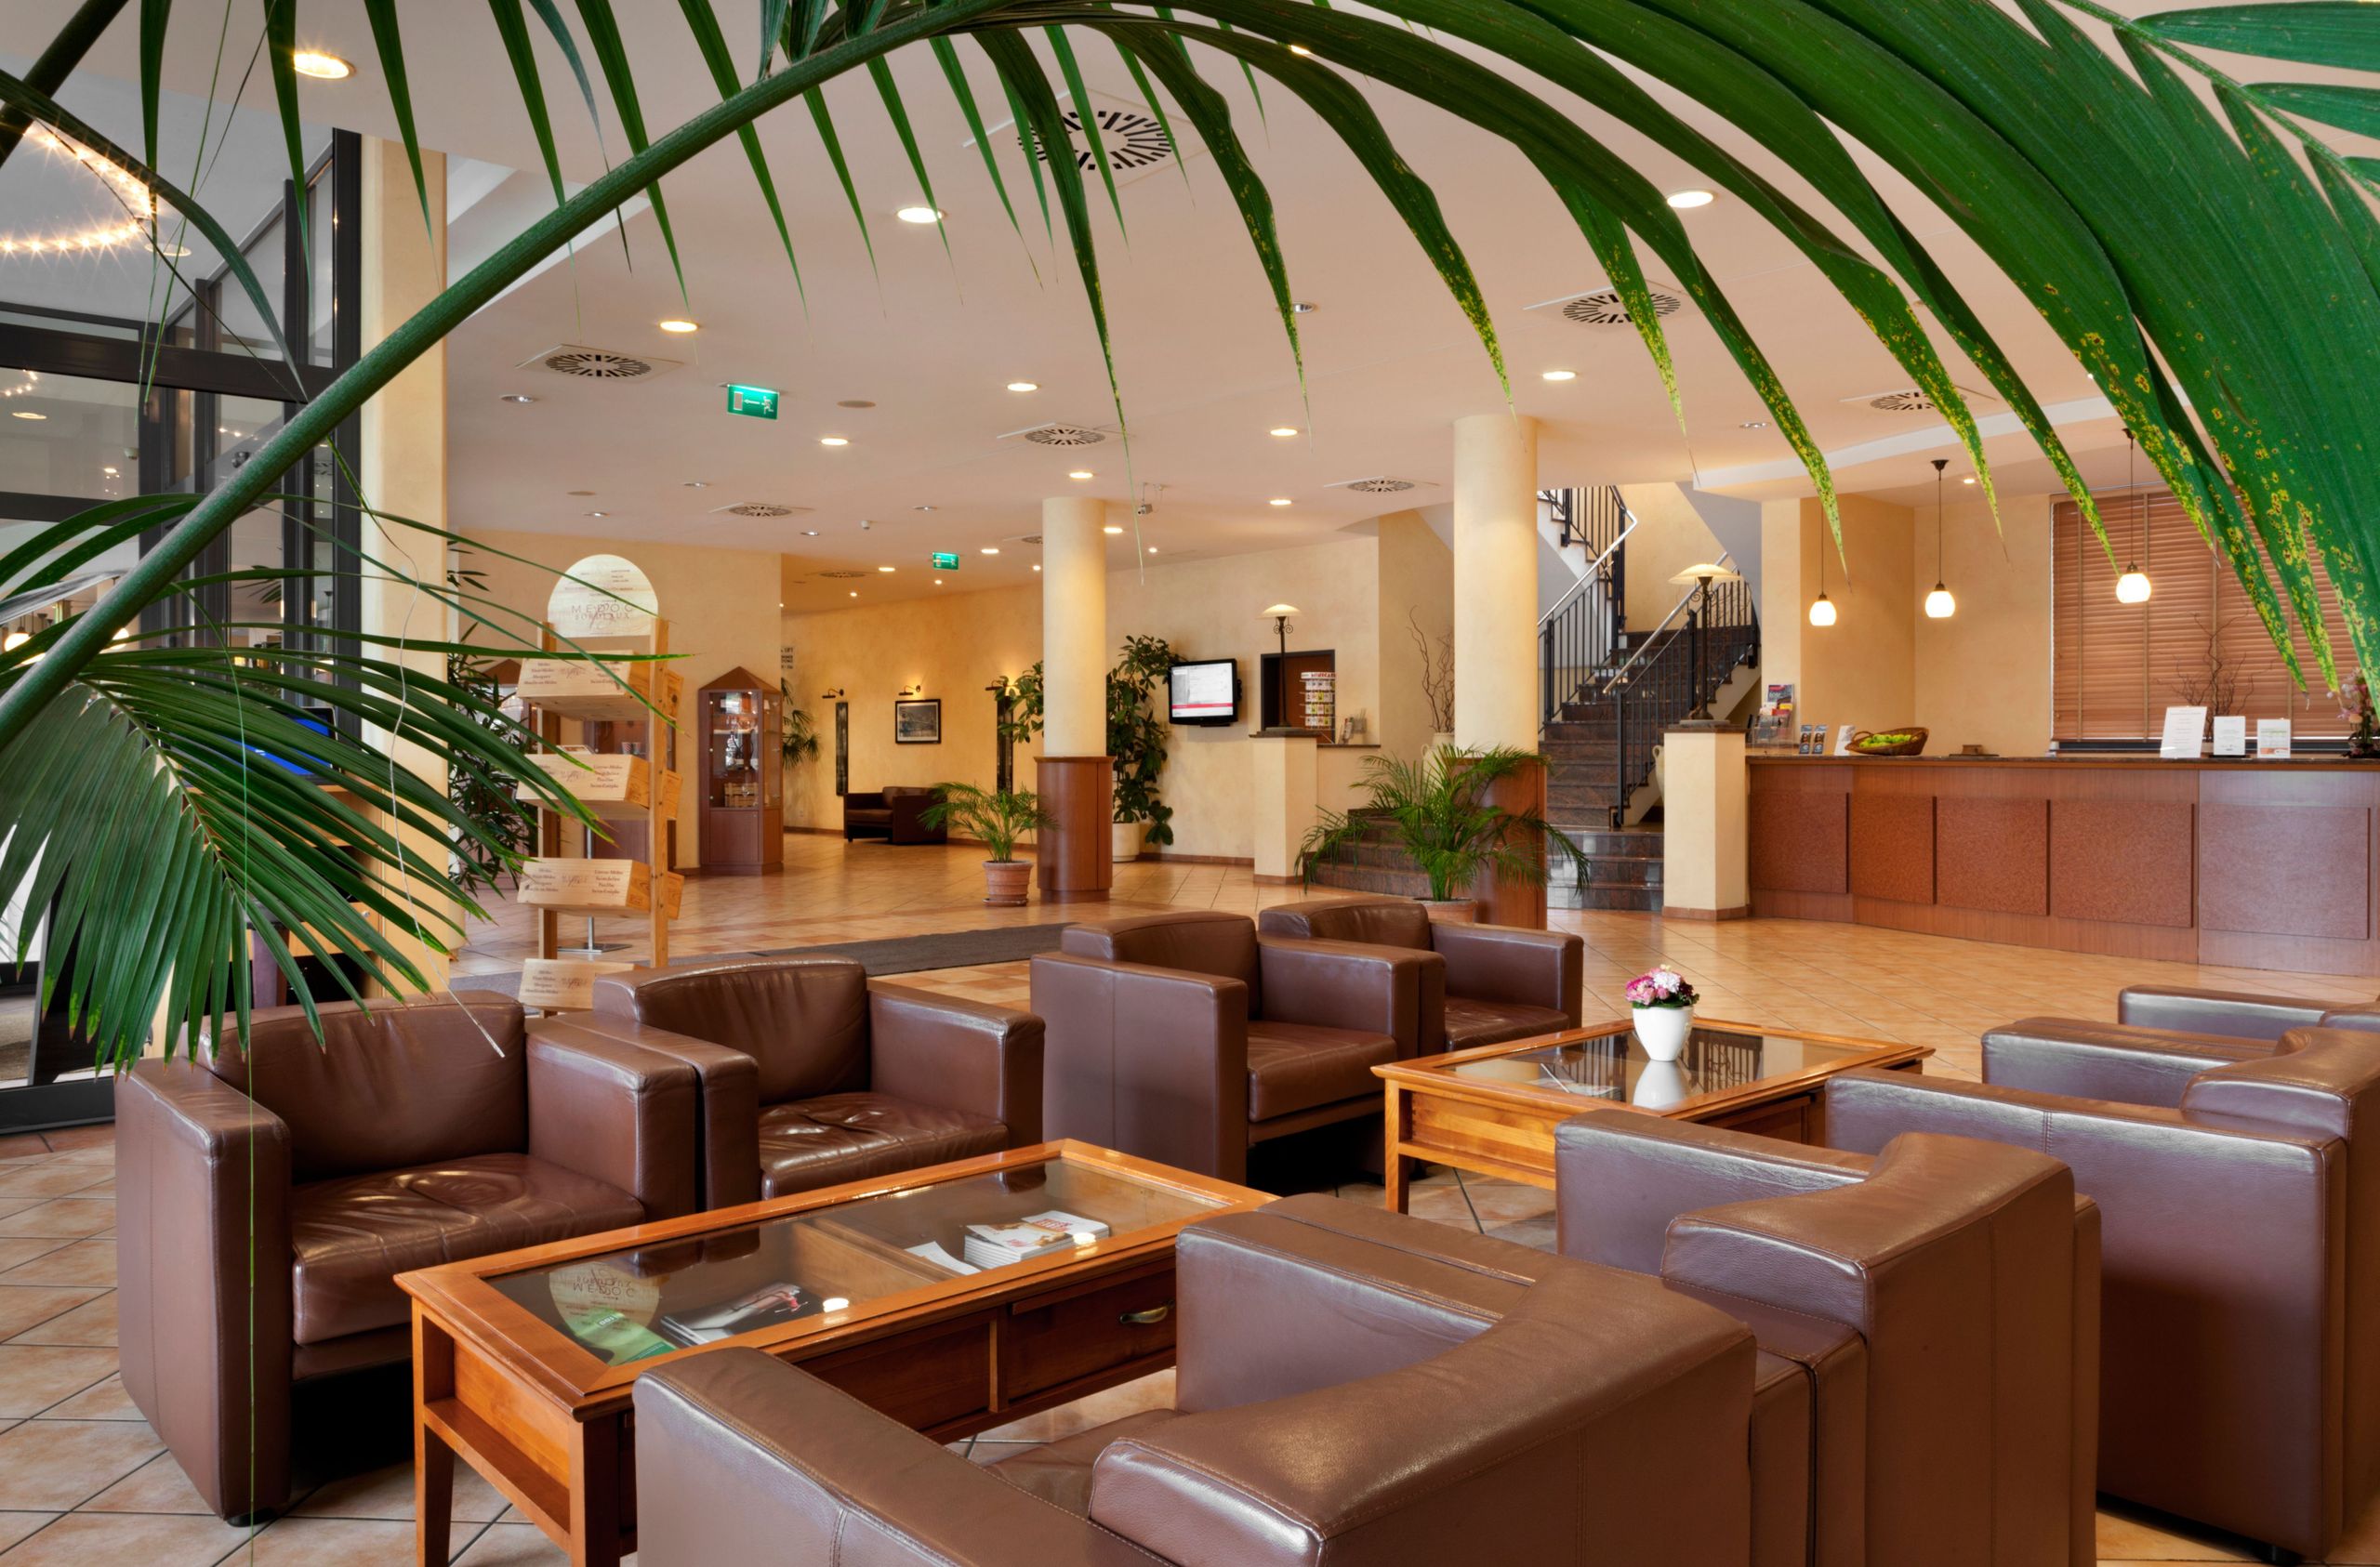 IntercityHotel Bremen - lobby - réception - lounge